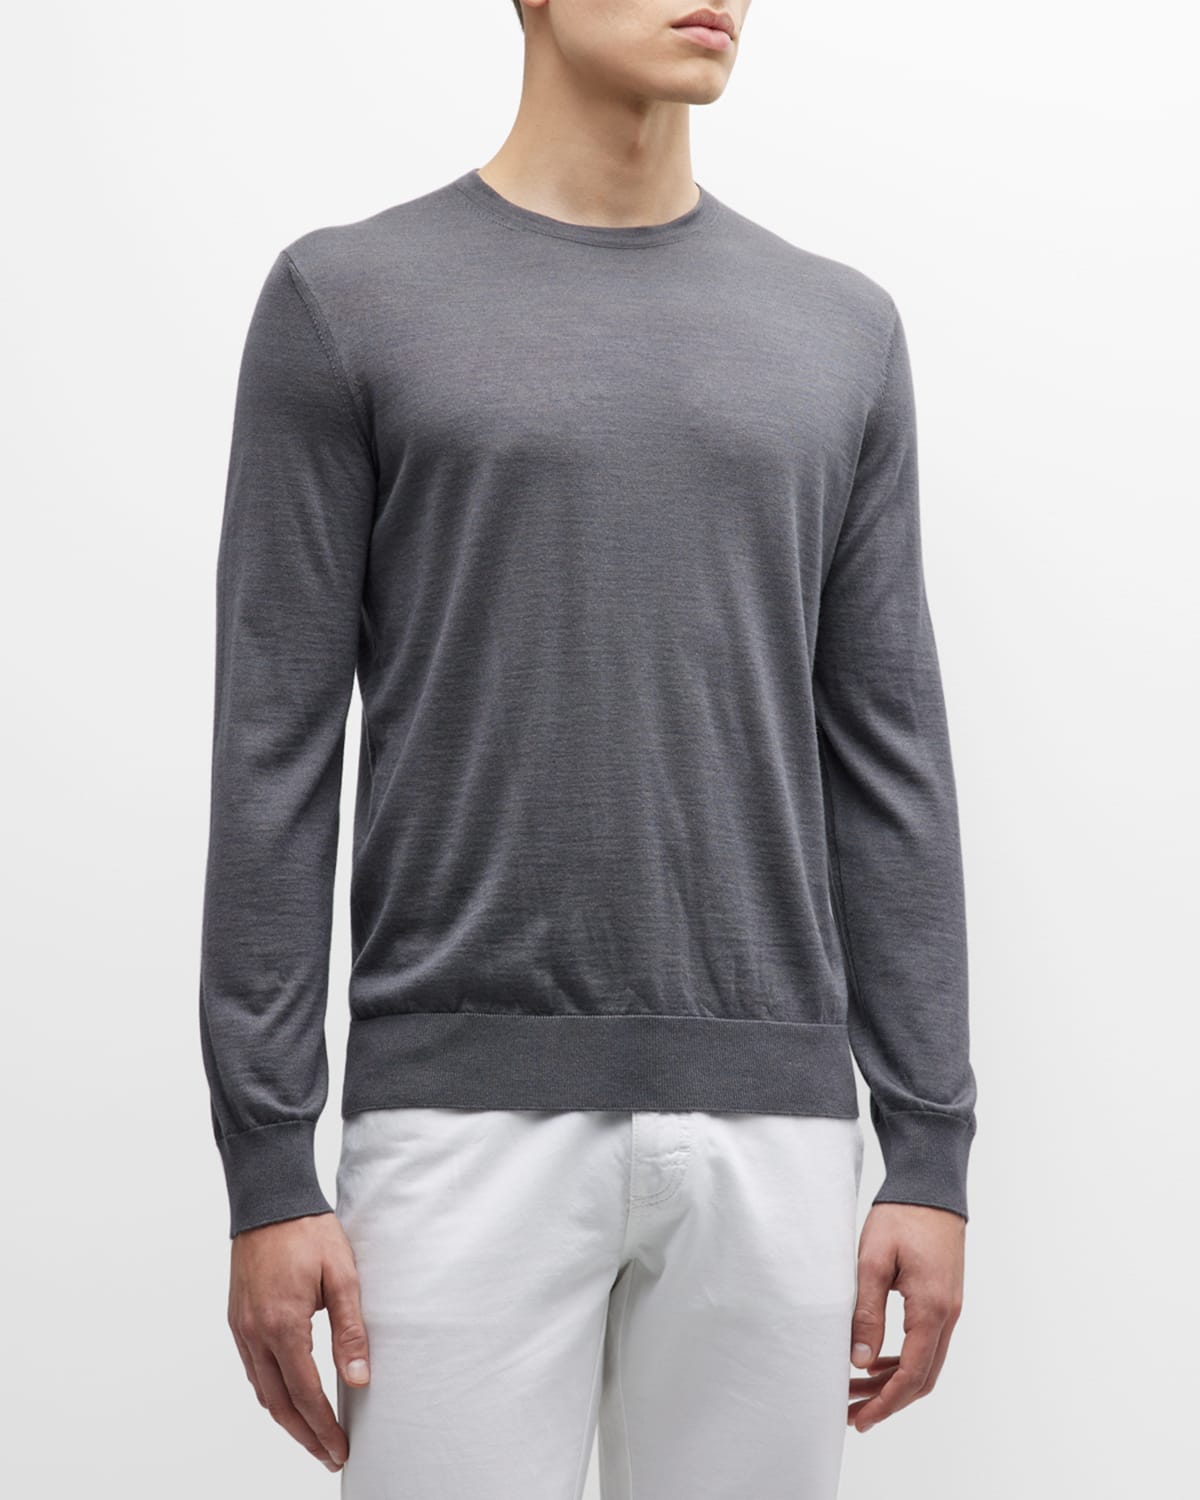 ZEGNA Men's Cashmere-Silk Crewneck Sweater | Neiman Marcus